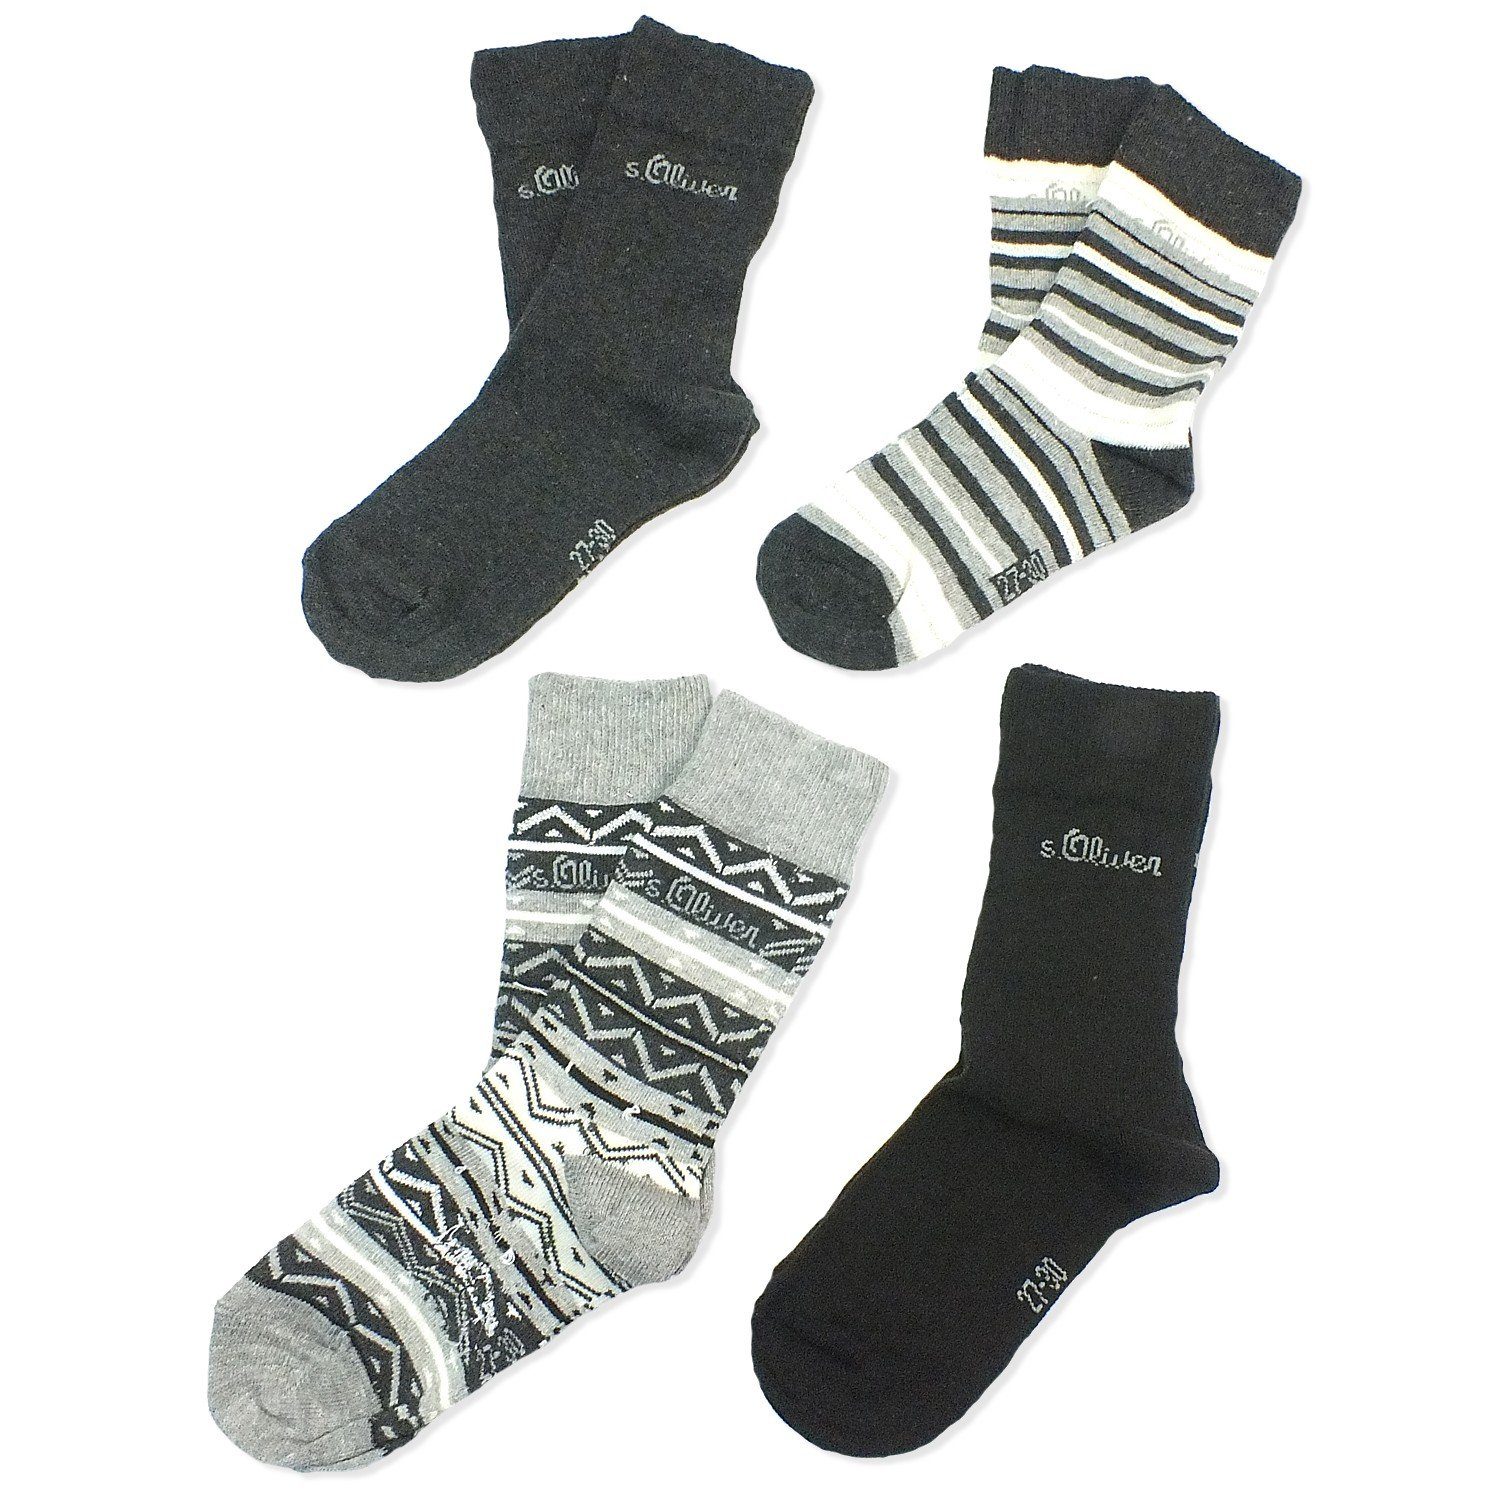 Langsocken & Baumwolle, s.Oliver mit Kindersocken Socken, Kinder 4-Paar, Paar) Jungen Mädchen 4 S20307 (Set,